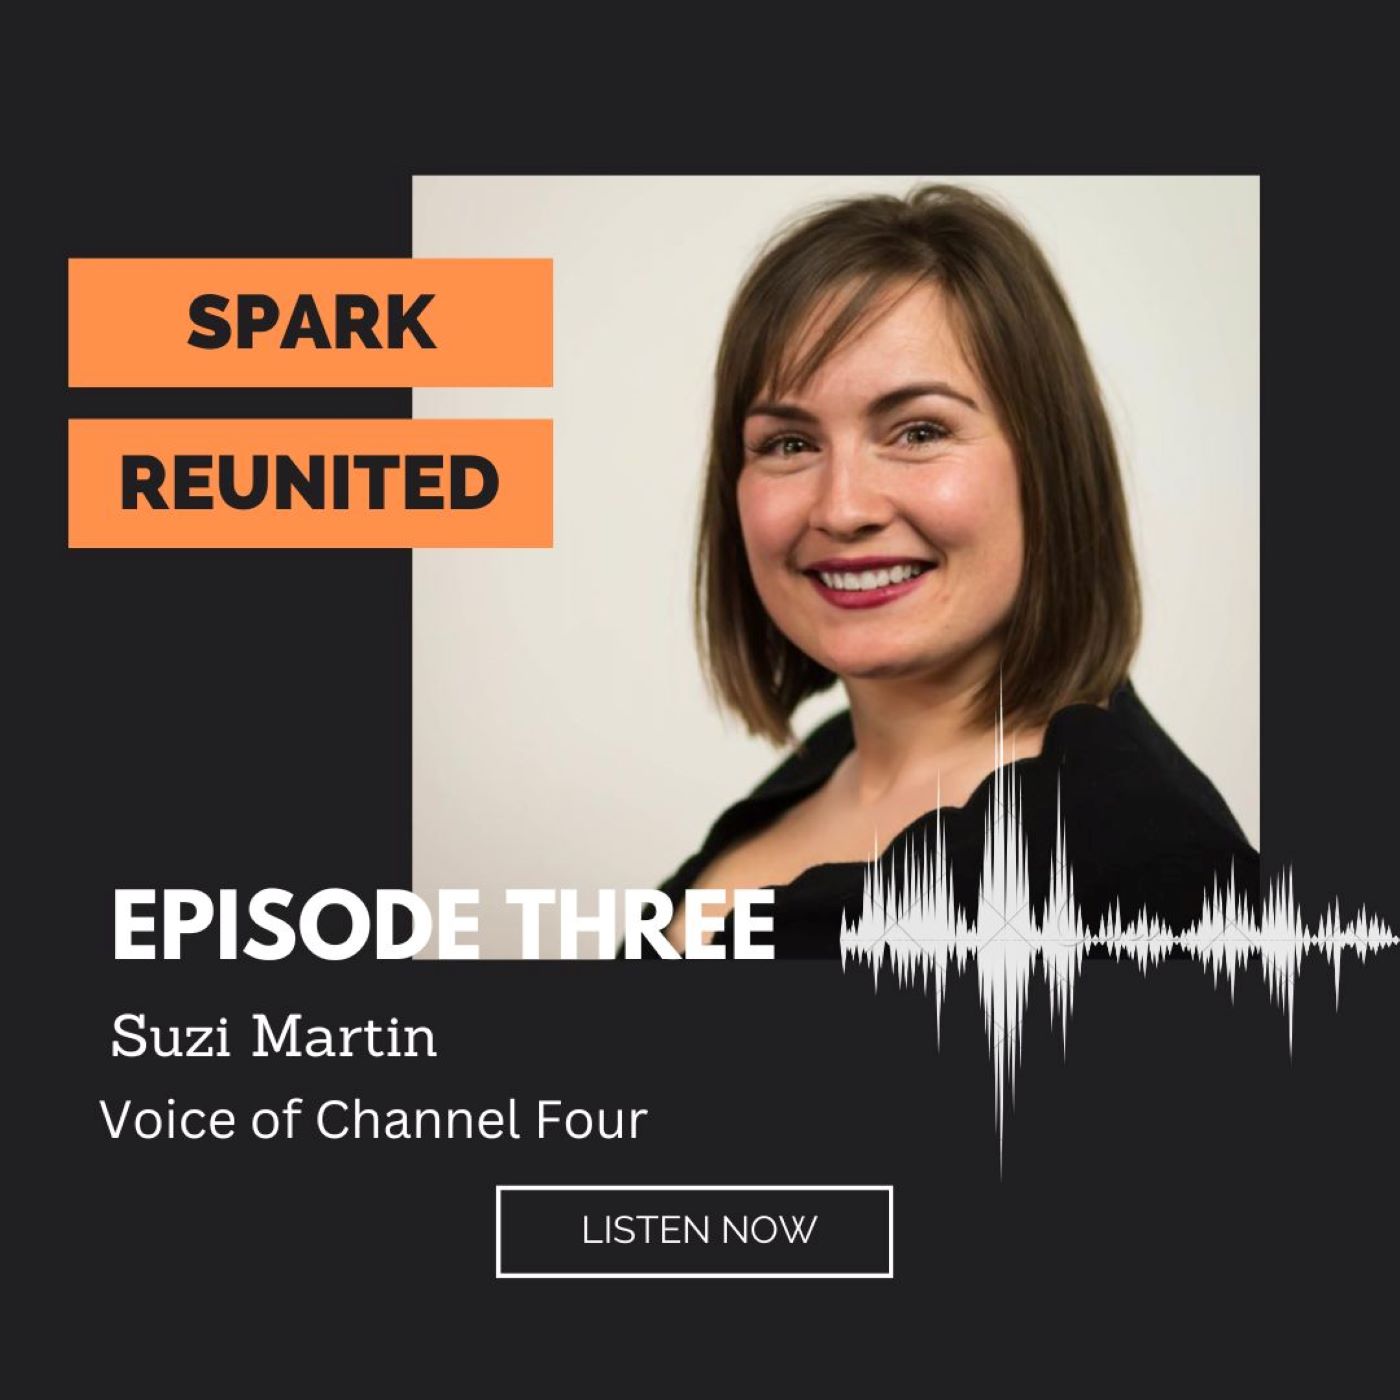 Artwork for podcast Spark Reunited